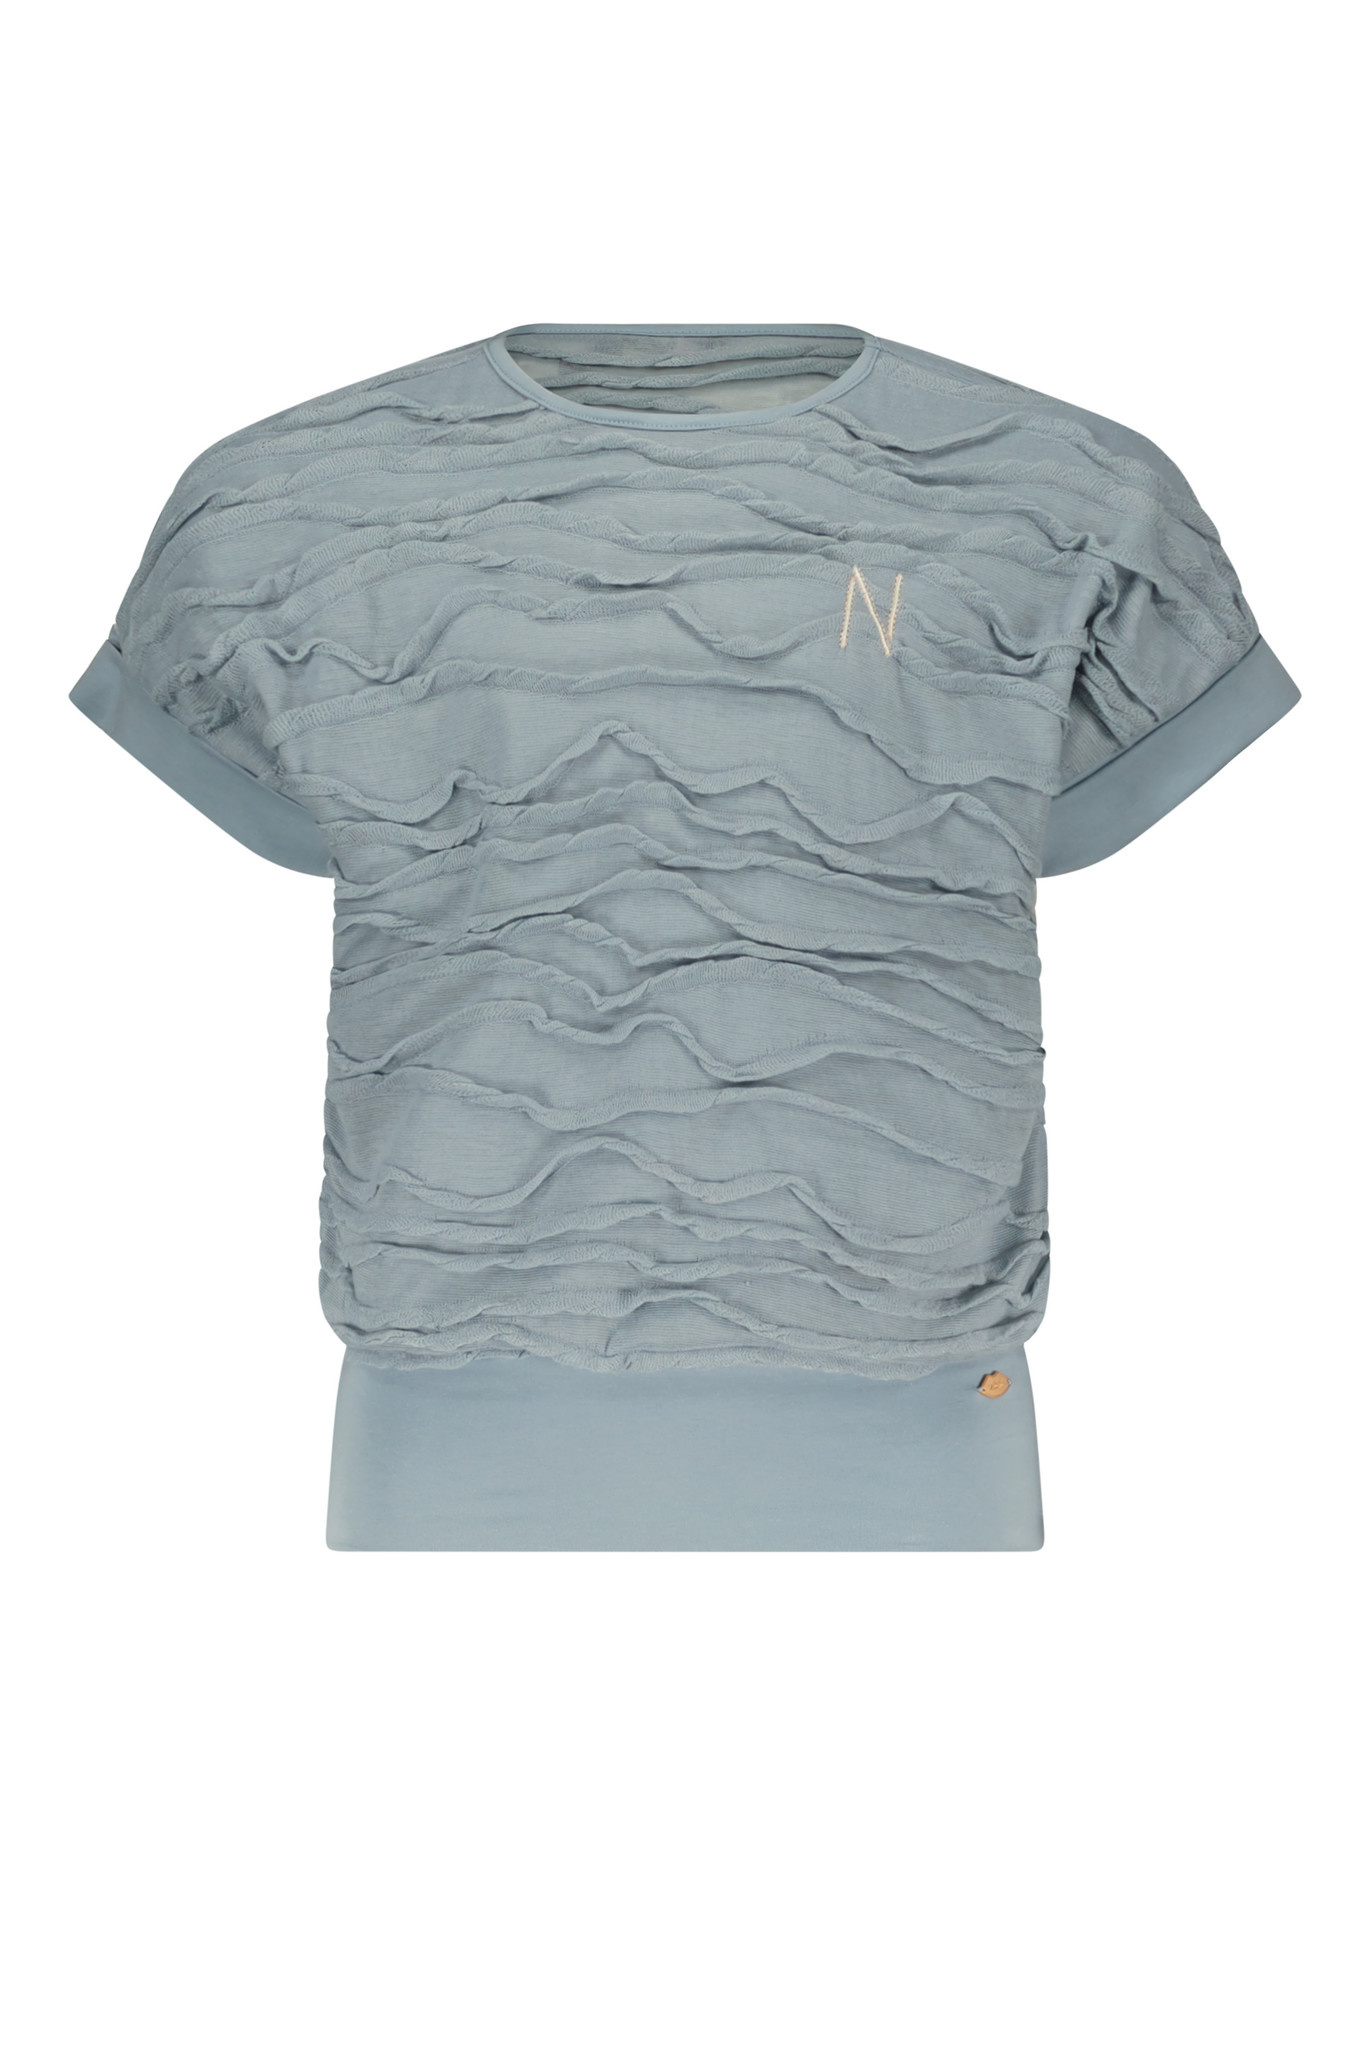 Nobell Kez Loose Fit Tshirt Tops & T-shirts Meisjes - Shirt - Blauw - Maat 158/164